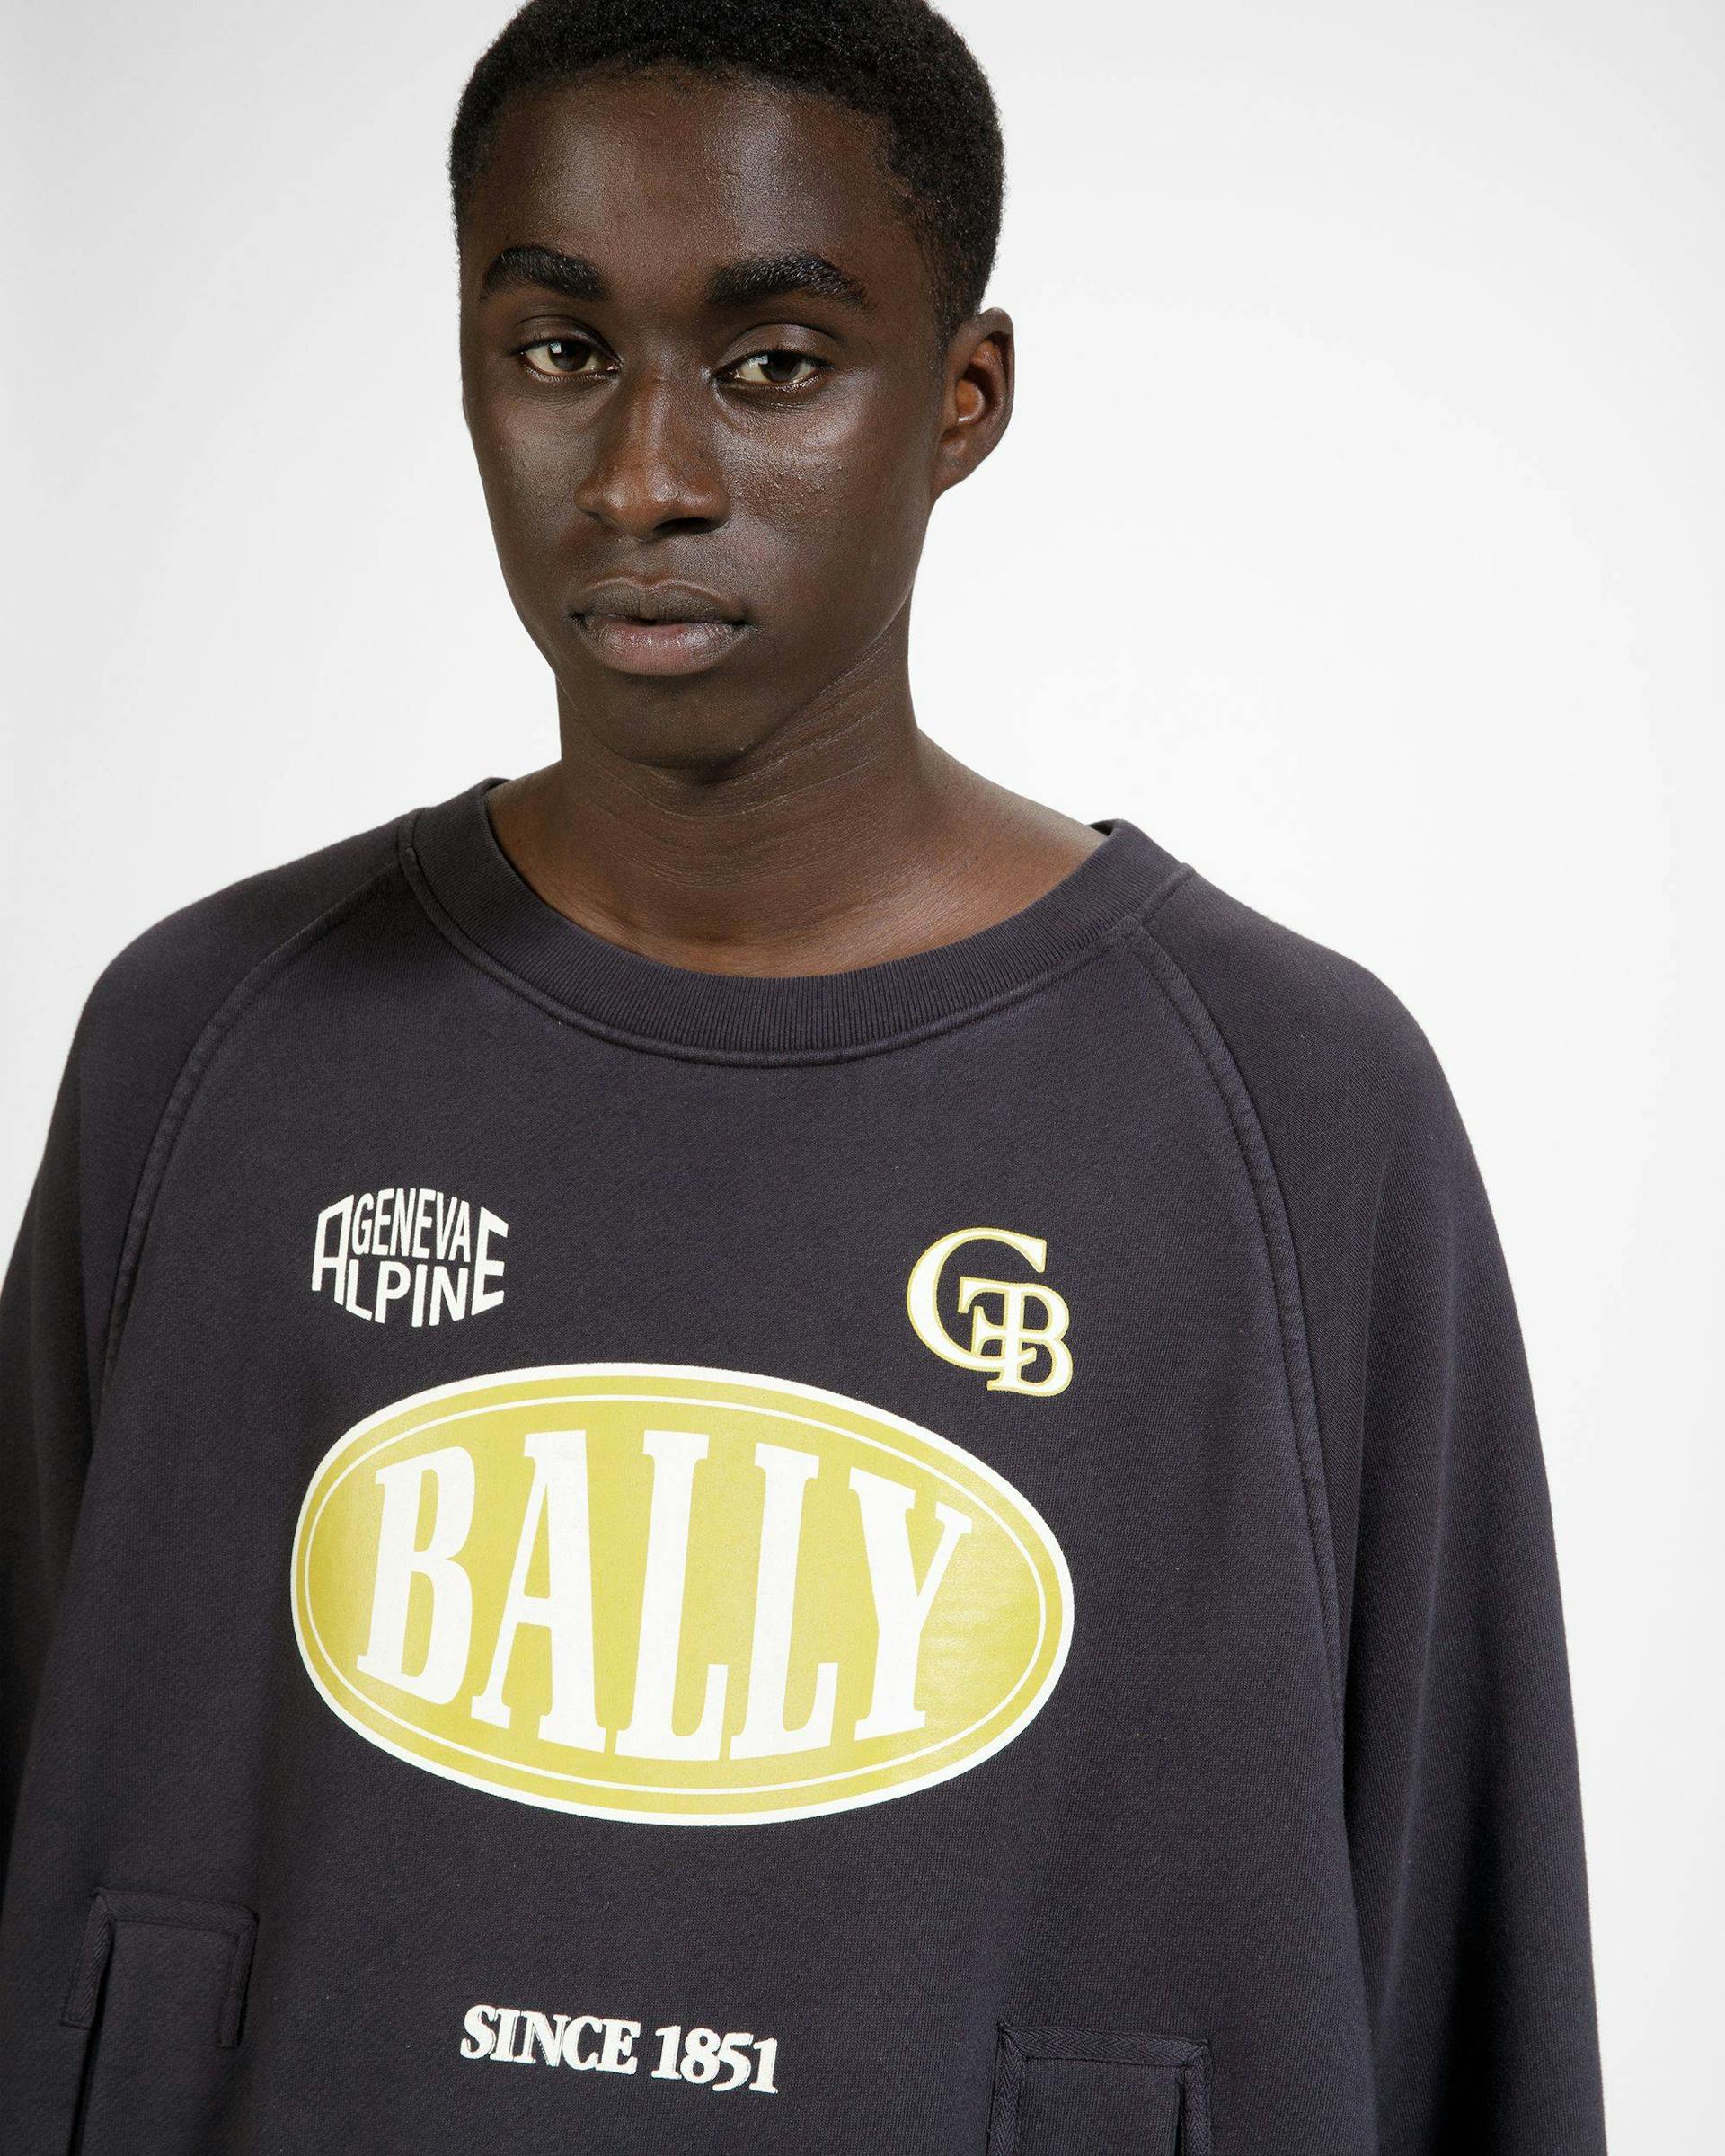 Cotton Printed Crew Neck Sweatshirt In Black - Men's - Bally - 03